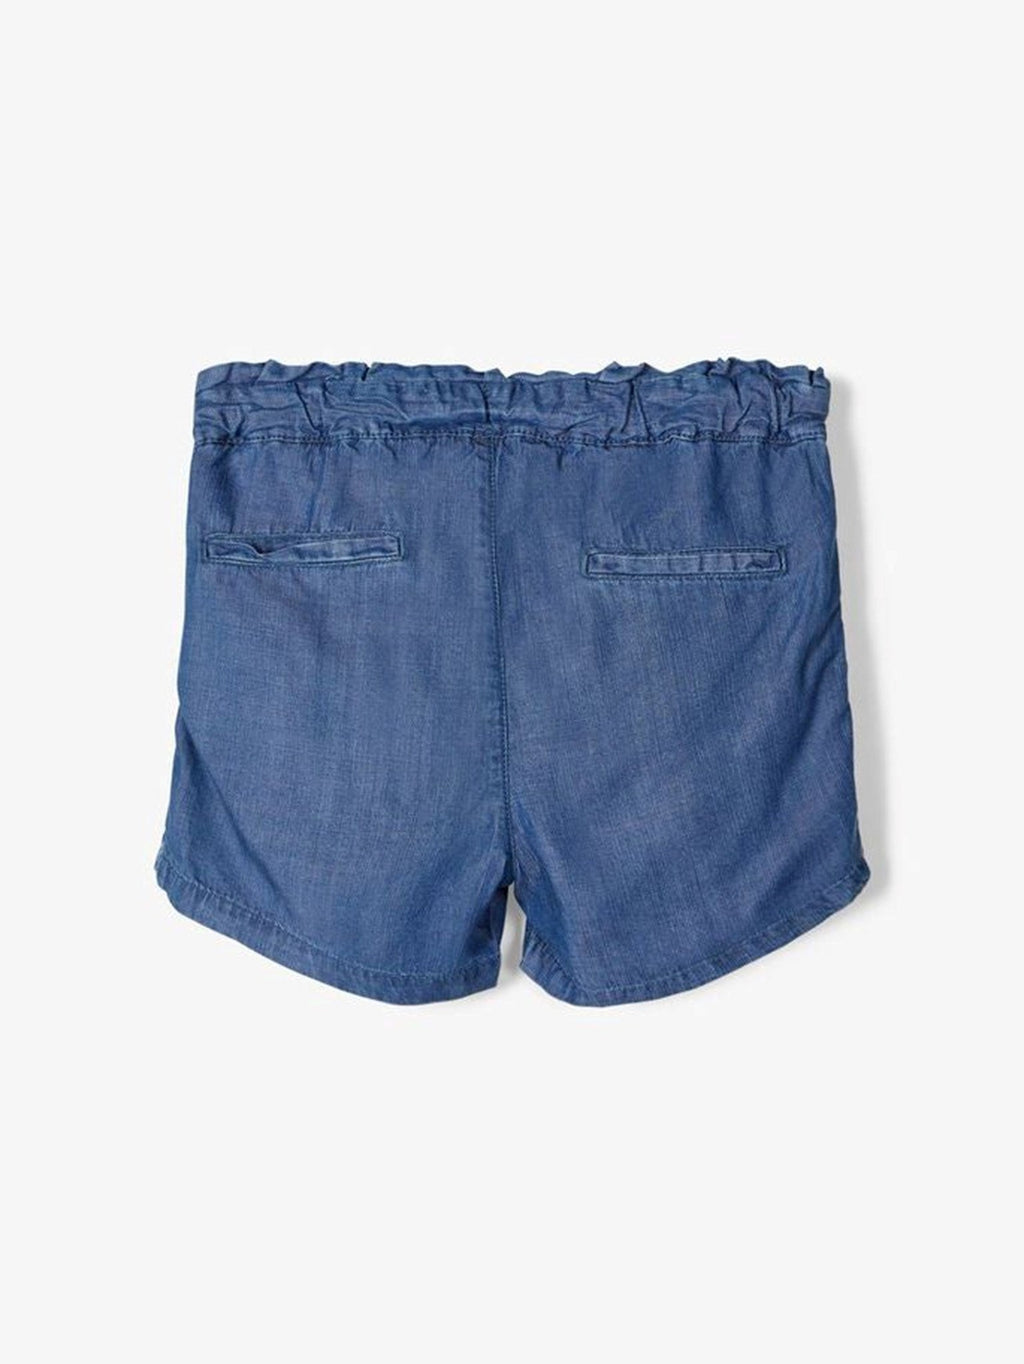 Light Denim shorts - Blue